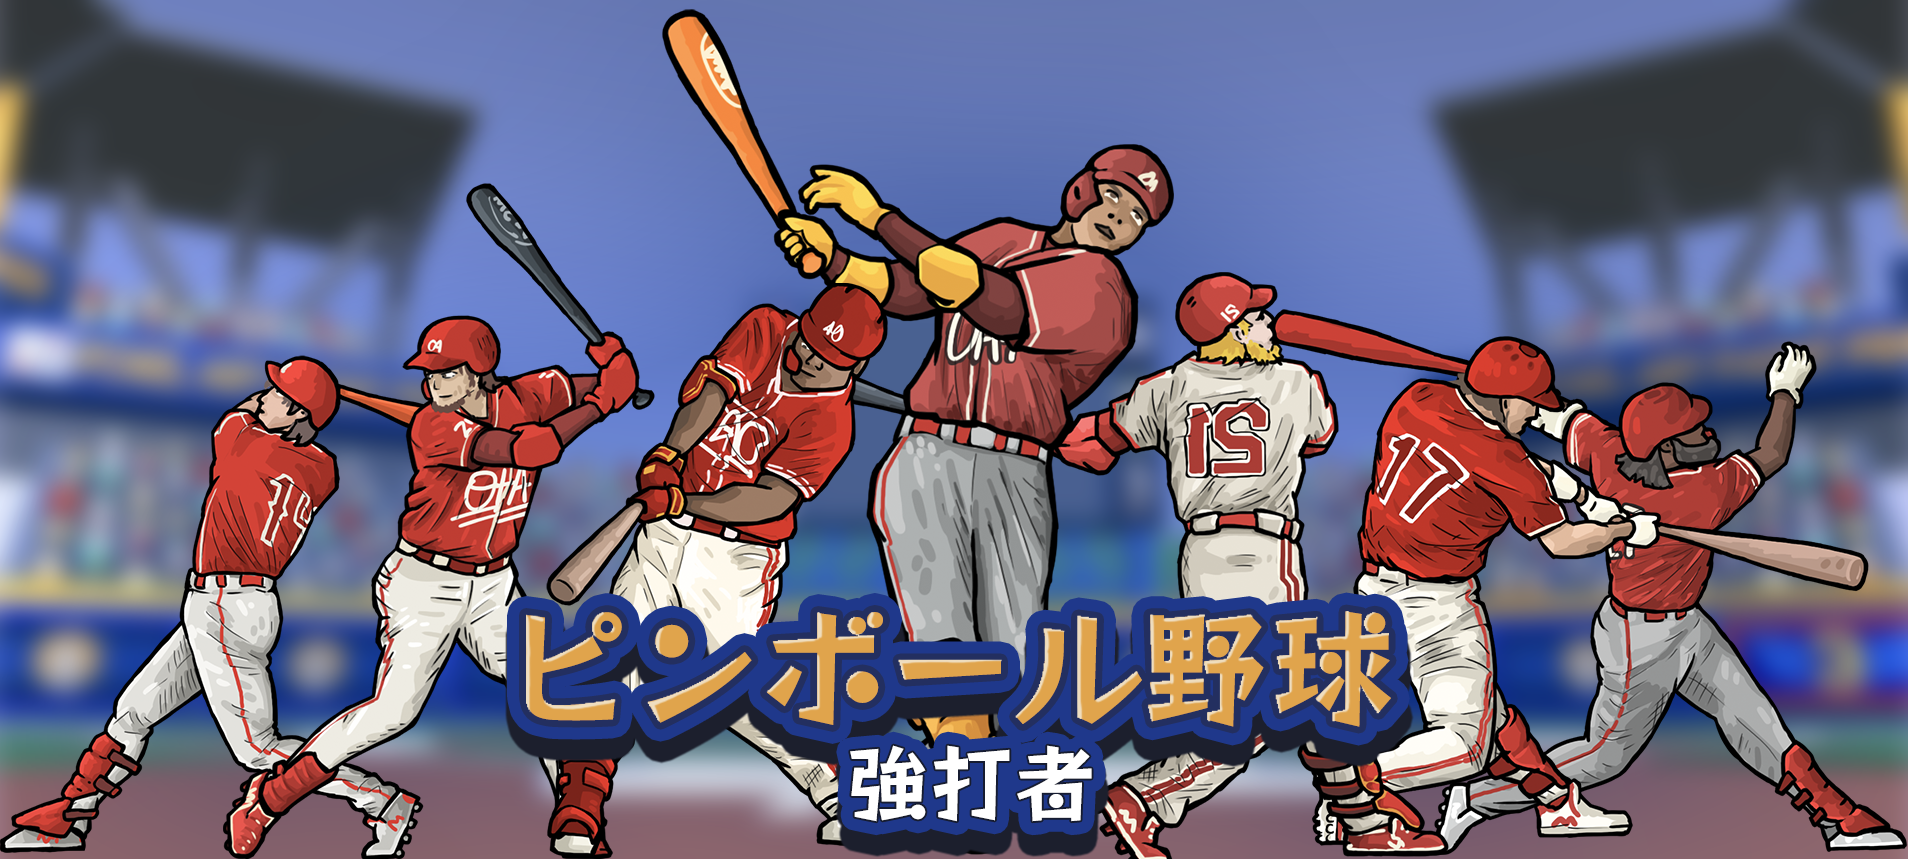 Screenshot 1 of ピンボール野球ゲーム - 強打者 2.0.0